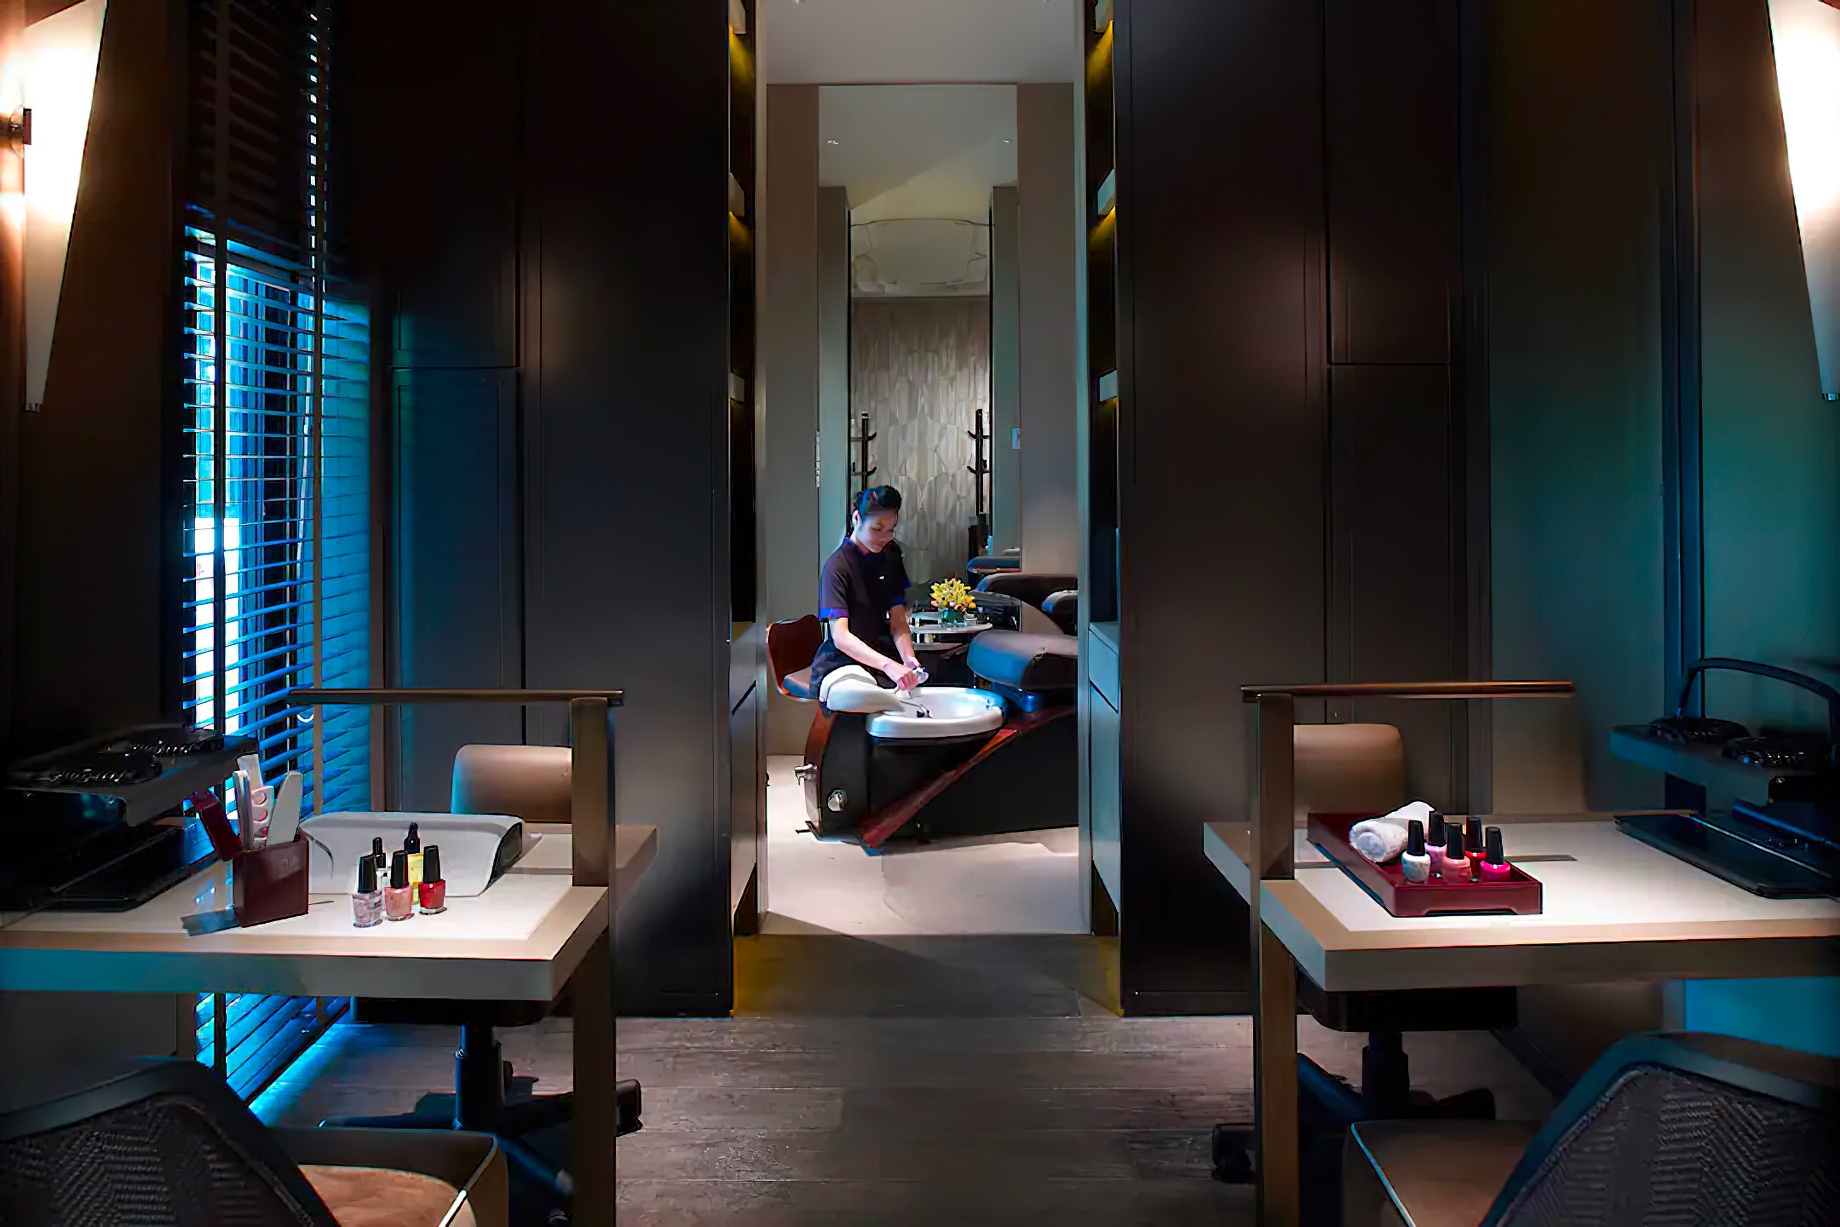 Mandarin Oriental, Singapore Hotel – Singapore – Spa Manicure and Ppedicure Treatment